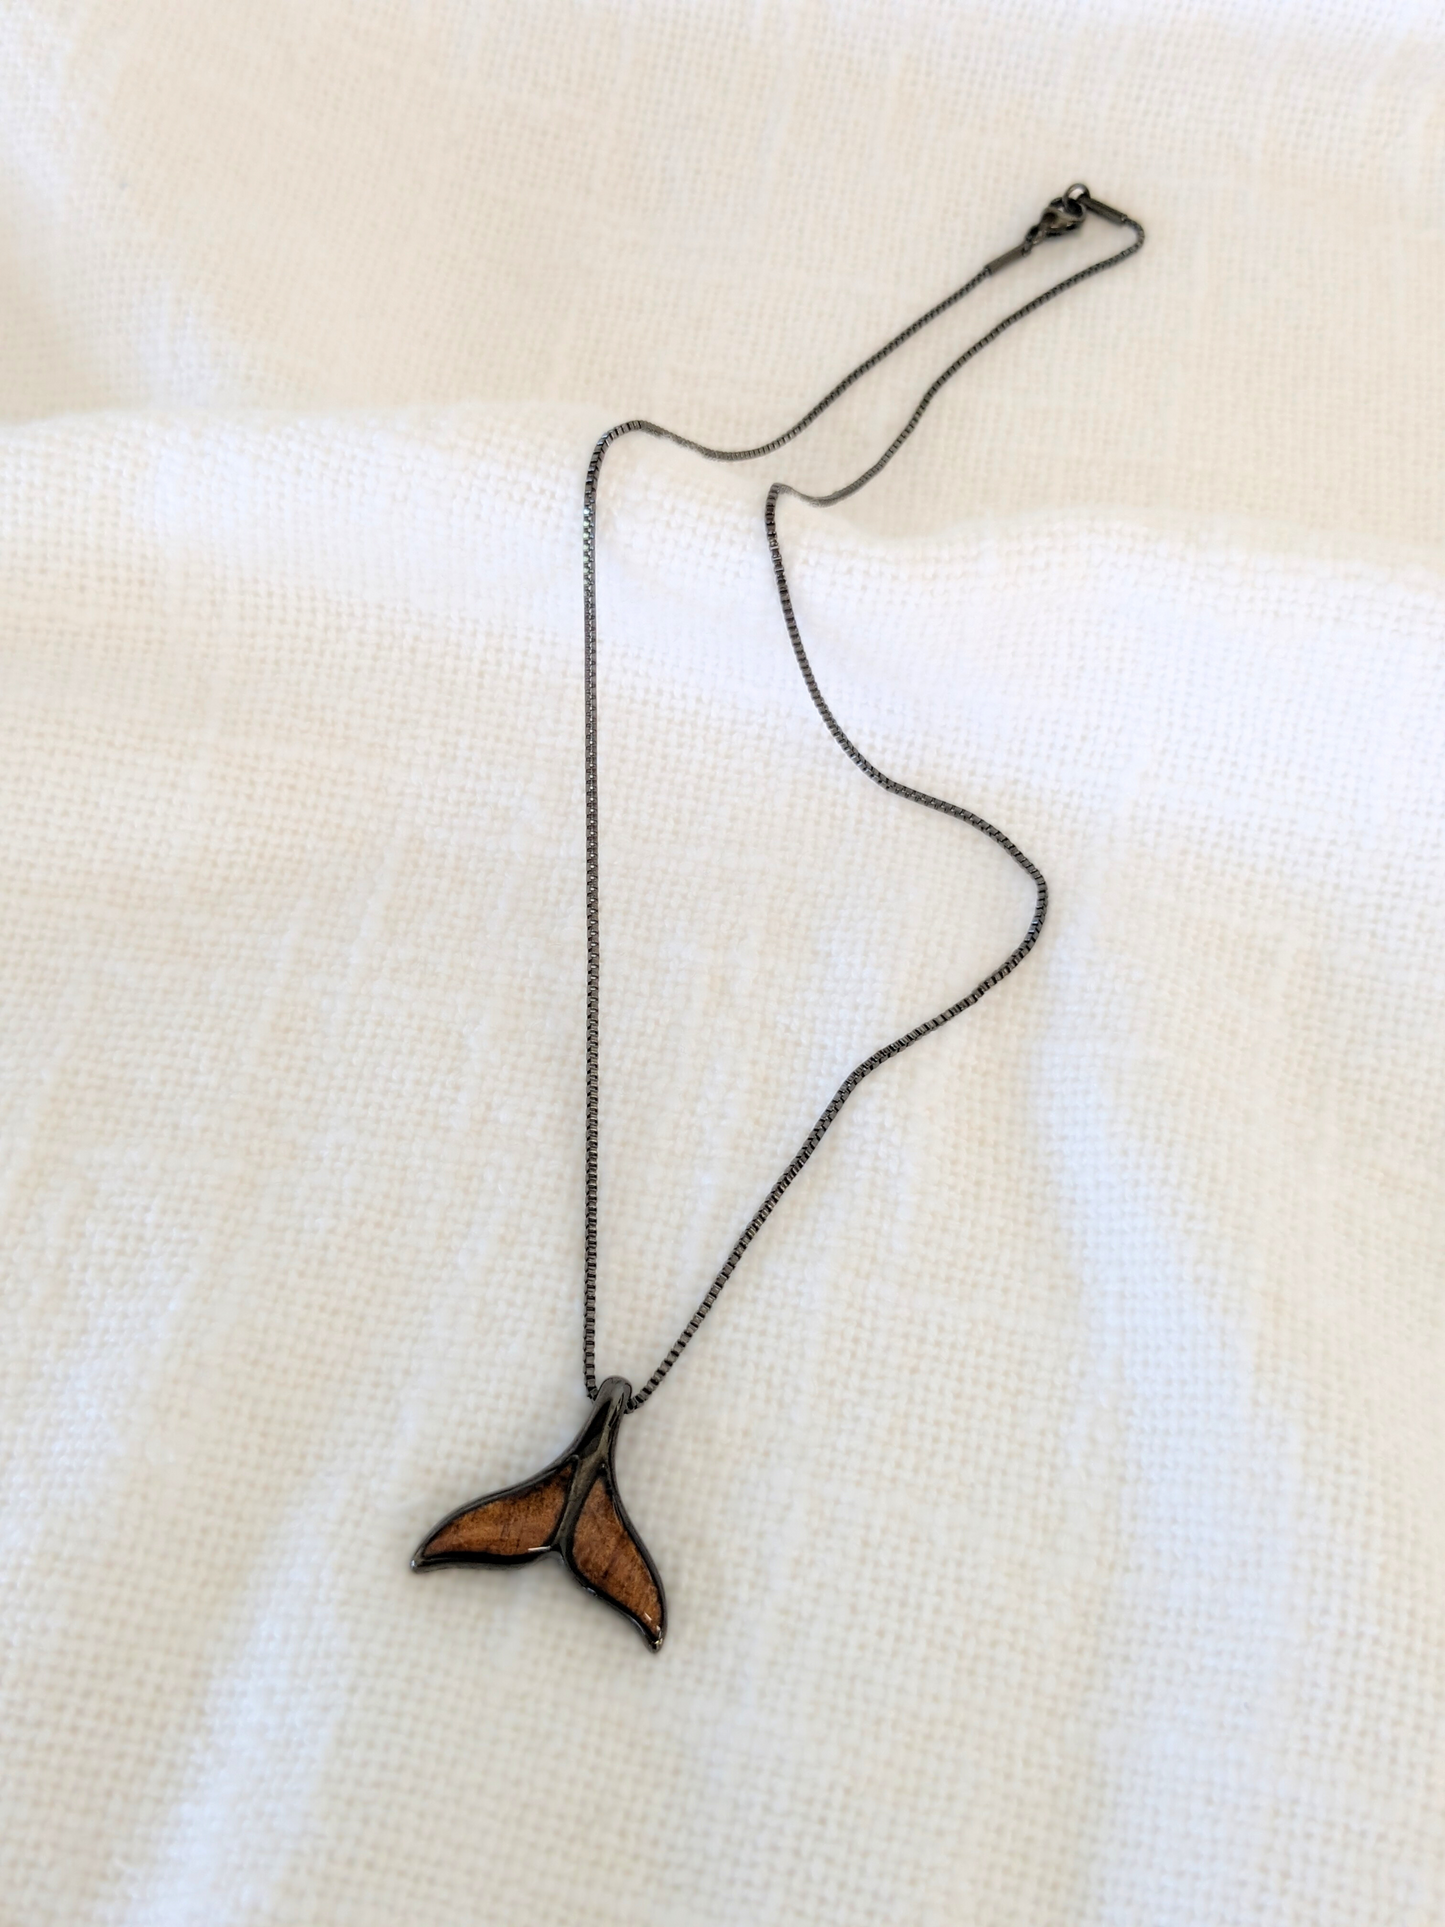 Hawaiian Koa Whale Tail Necklace - Gunmetal